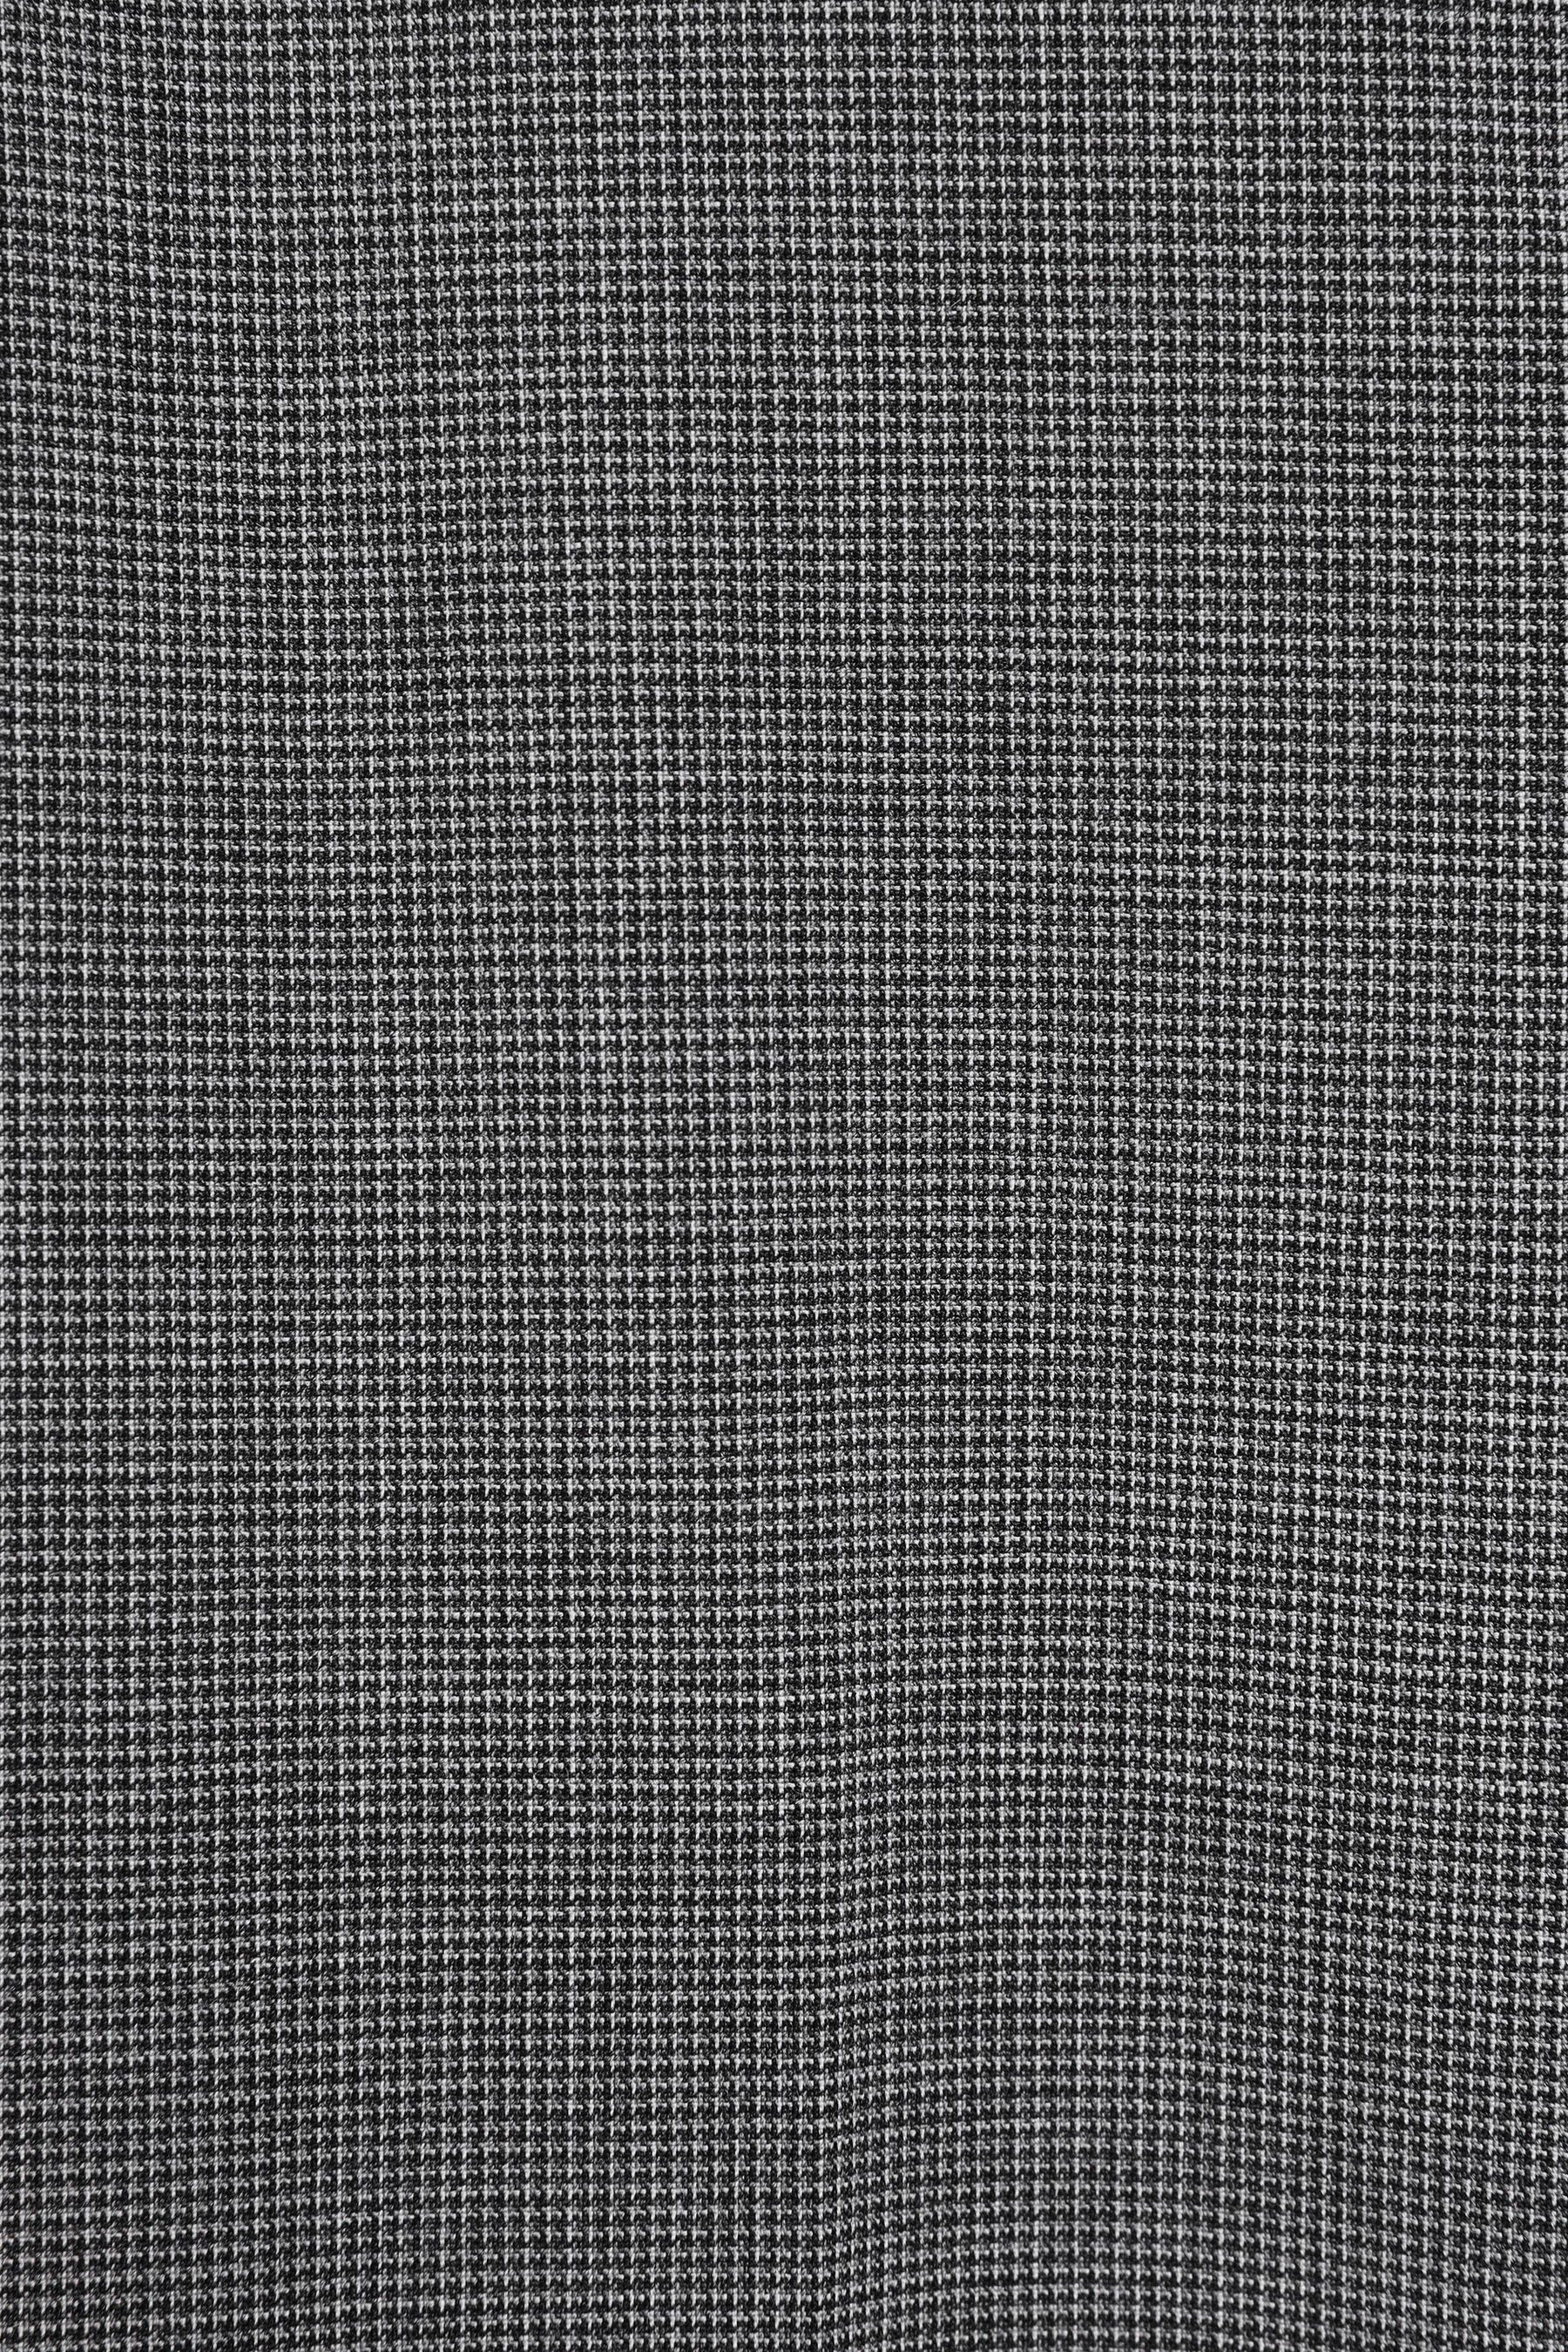 Anzughose aus Slim Grey Signature Fit Motionflex Wolle Next Anzughose (1-tlg)